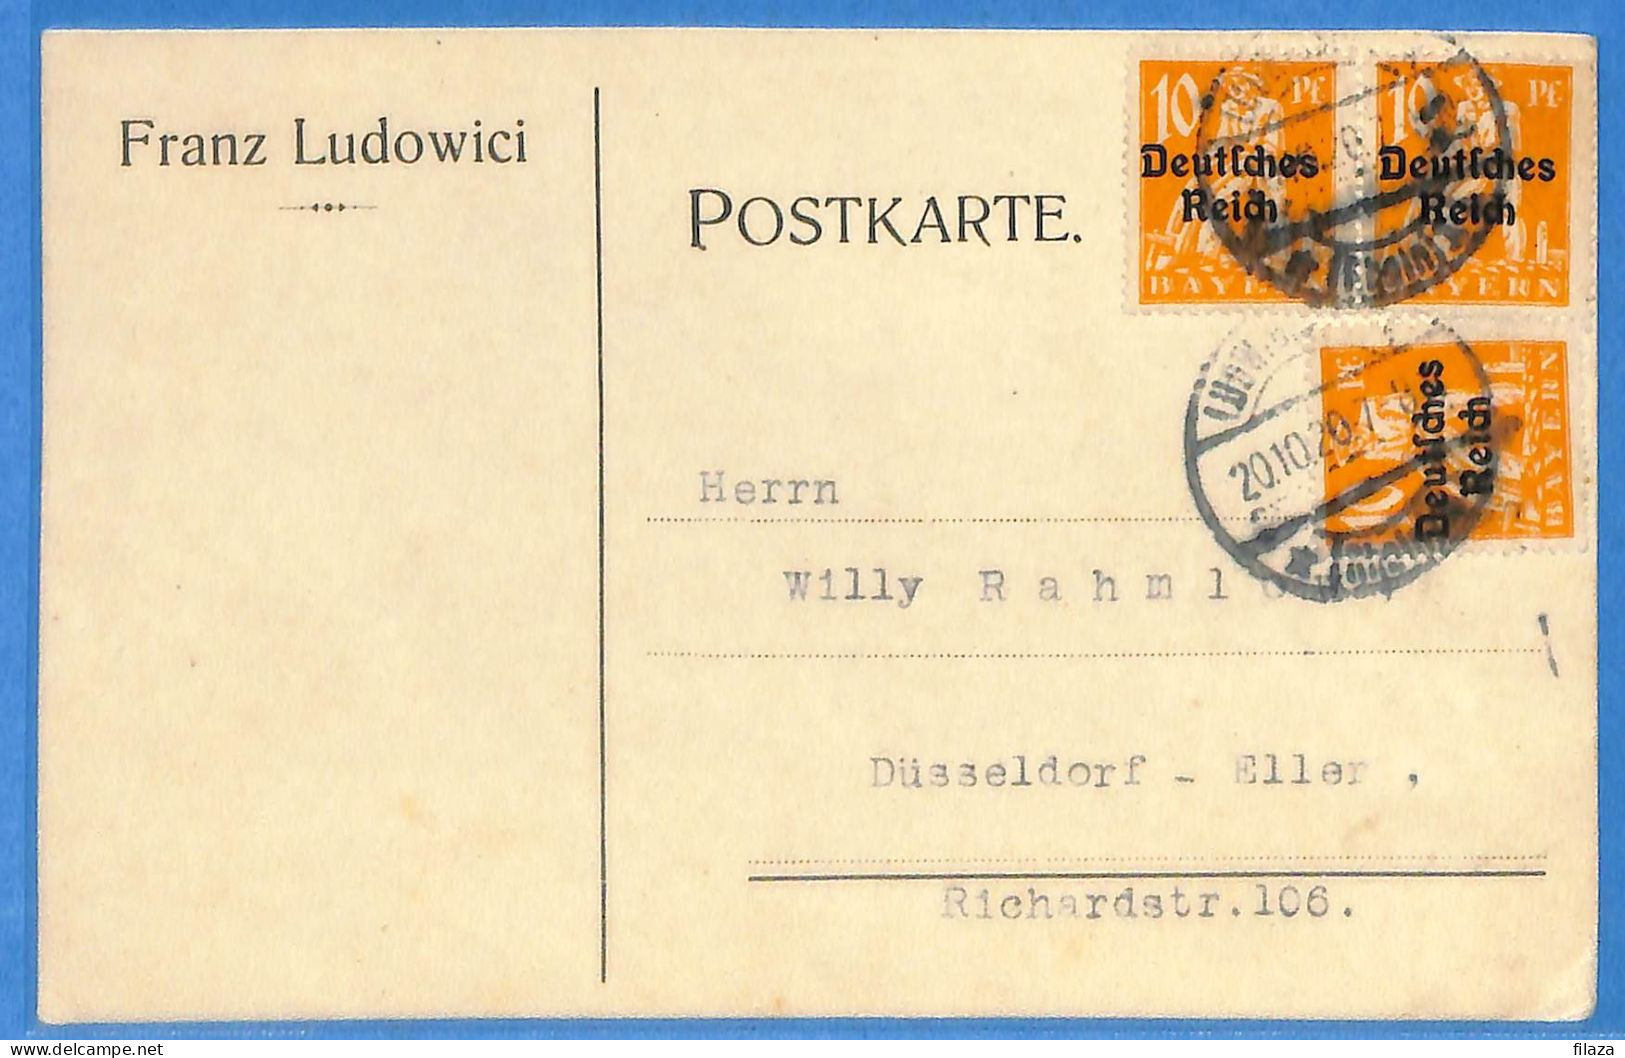 Allemagne Reich 1920 - Carte Postale De Ludwigshafen - G33363 - Storia Postale